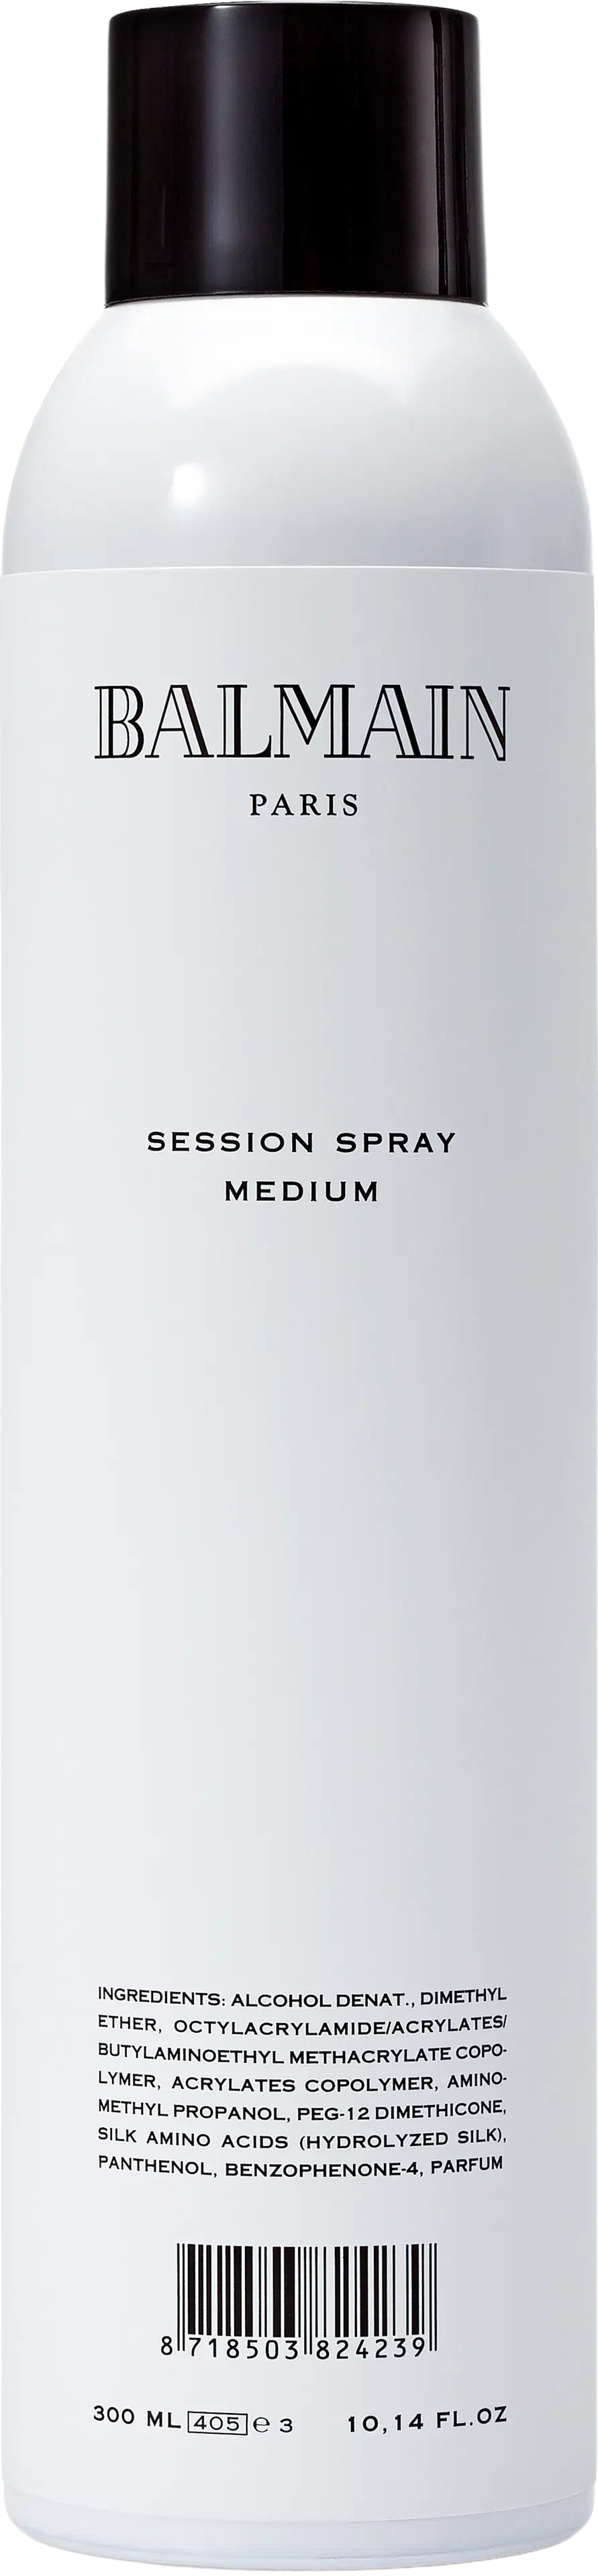 Balmain Session Spray Medium hiuskiinne 300 ml